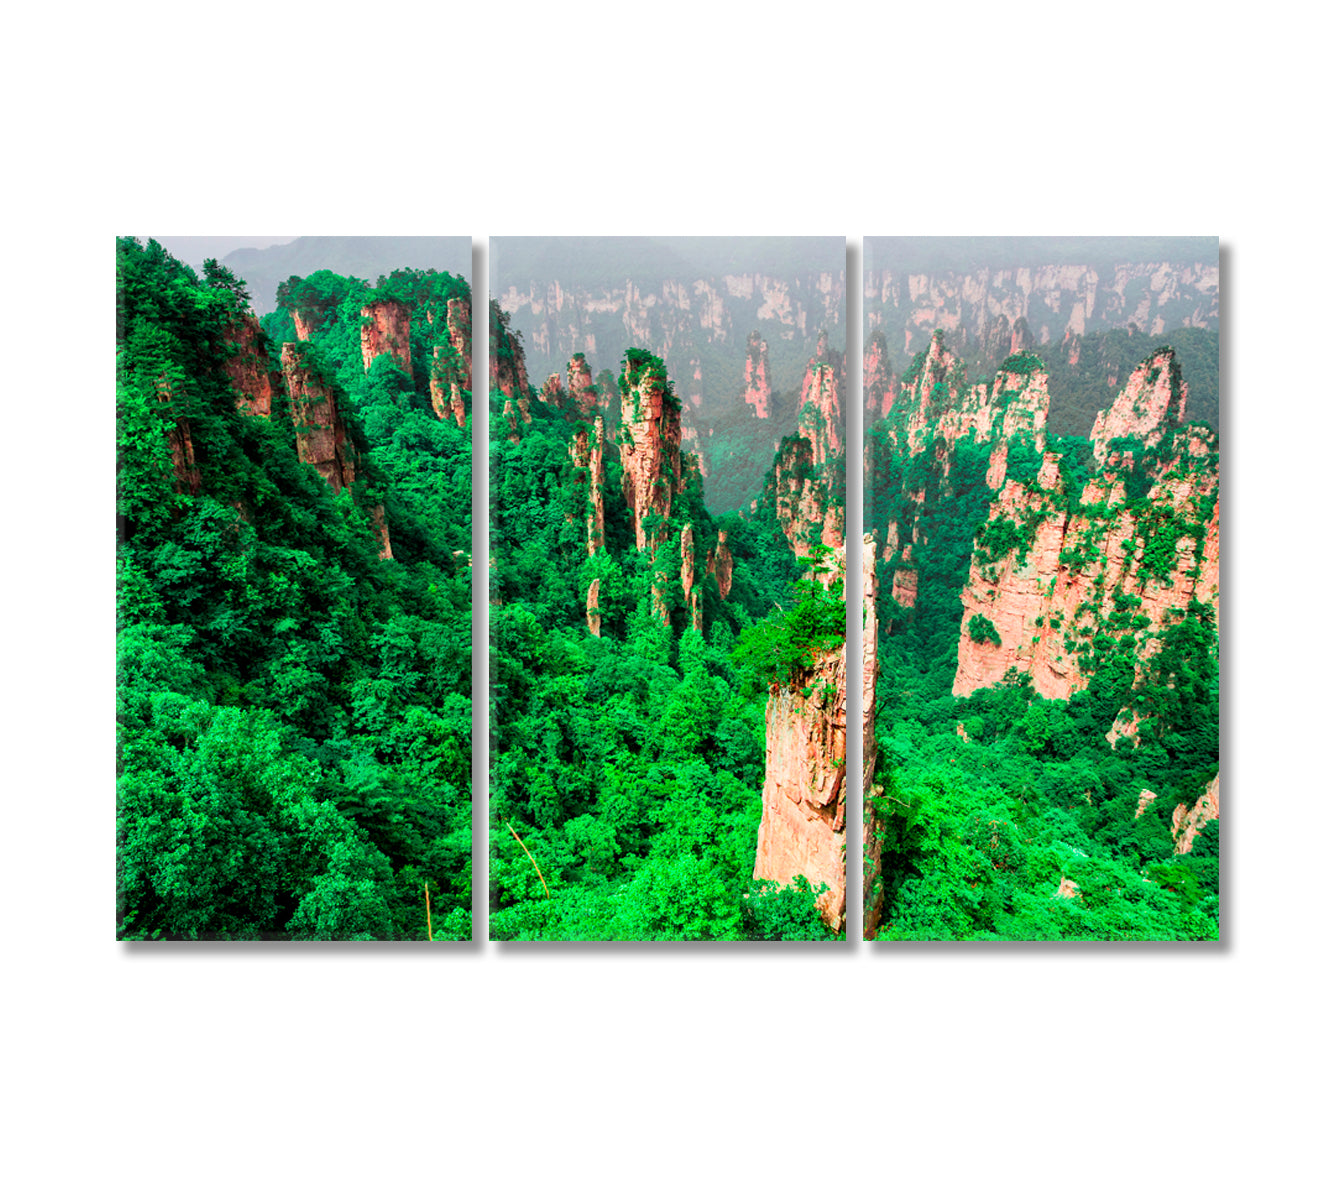 Tianzi Mountain Column Zhangjiajie National Forest Park China Canvas Print-Canvas Print-CetArt-3 Panels-36x24 inches-CetArt